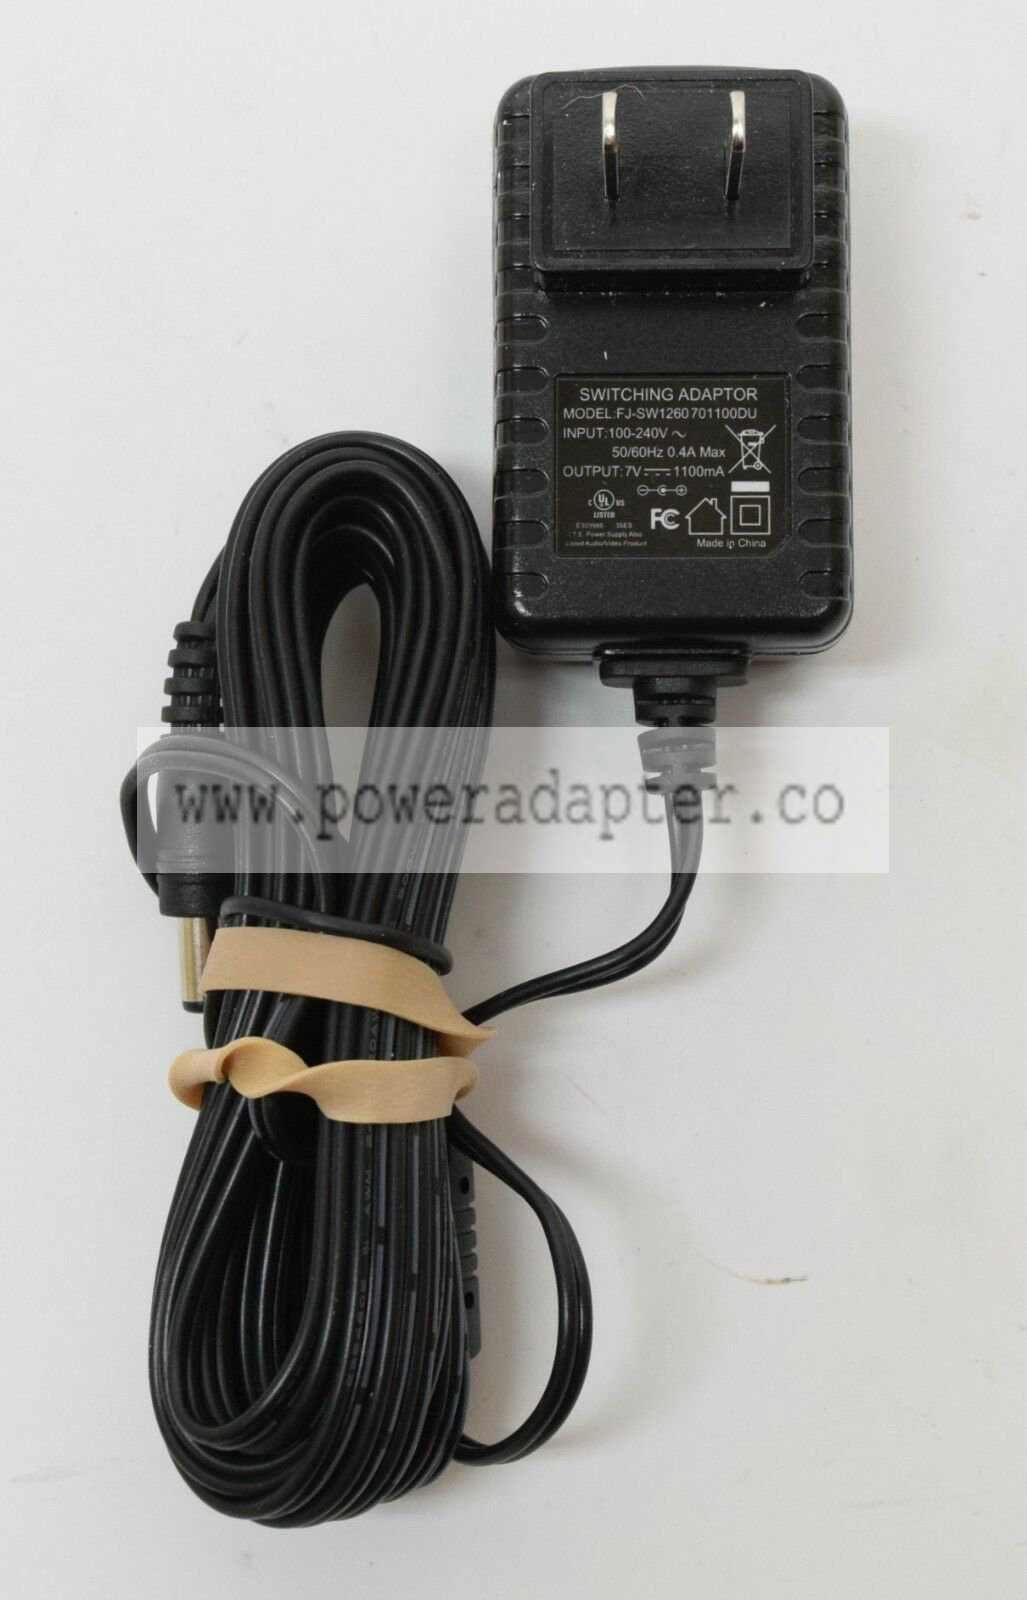 Switching Adaptor Power Supply AC/DC Adapter FJ-SW1260701100DU 7V 1100mA Switching Adaptor Power Supply AC/DC Adapter